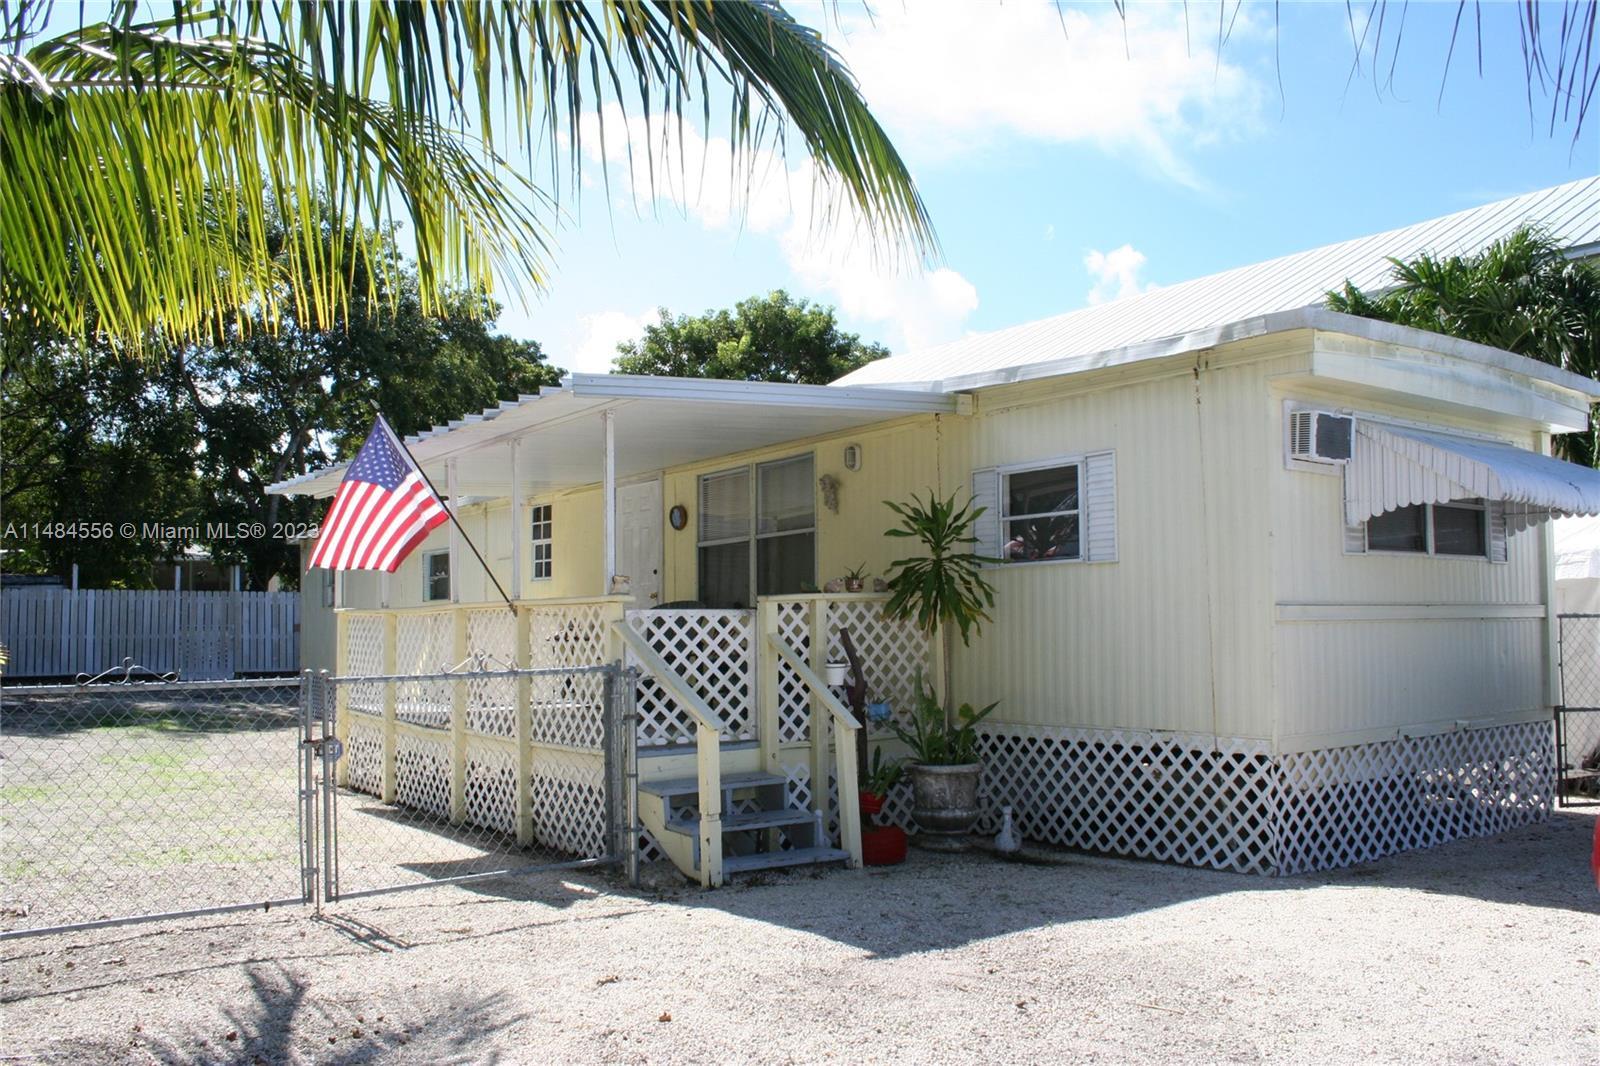 Photo of Address Not Disclosed in Key Largo, FL